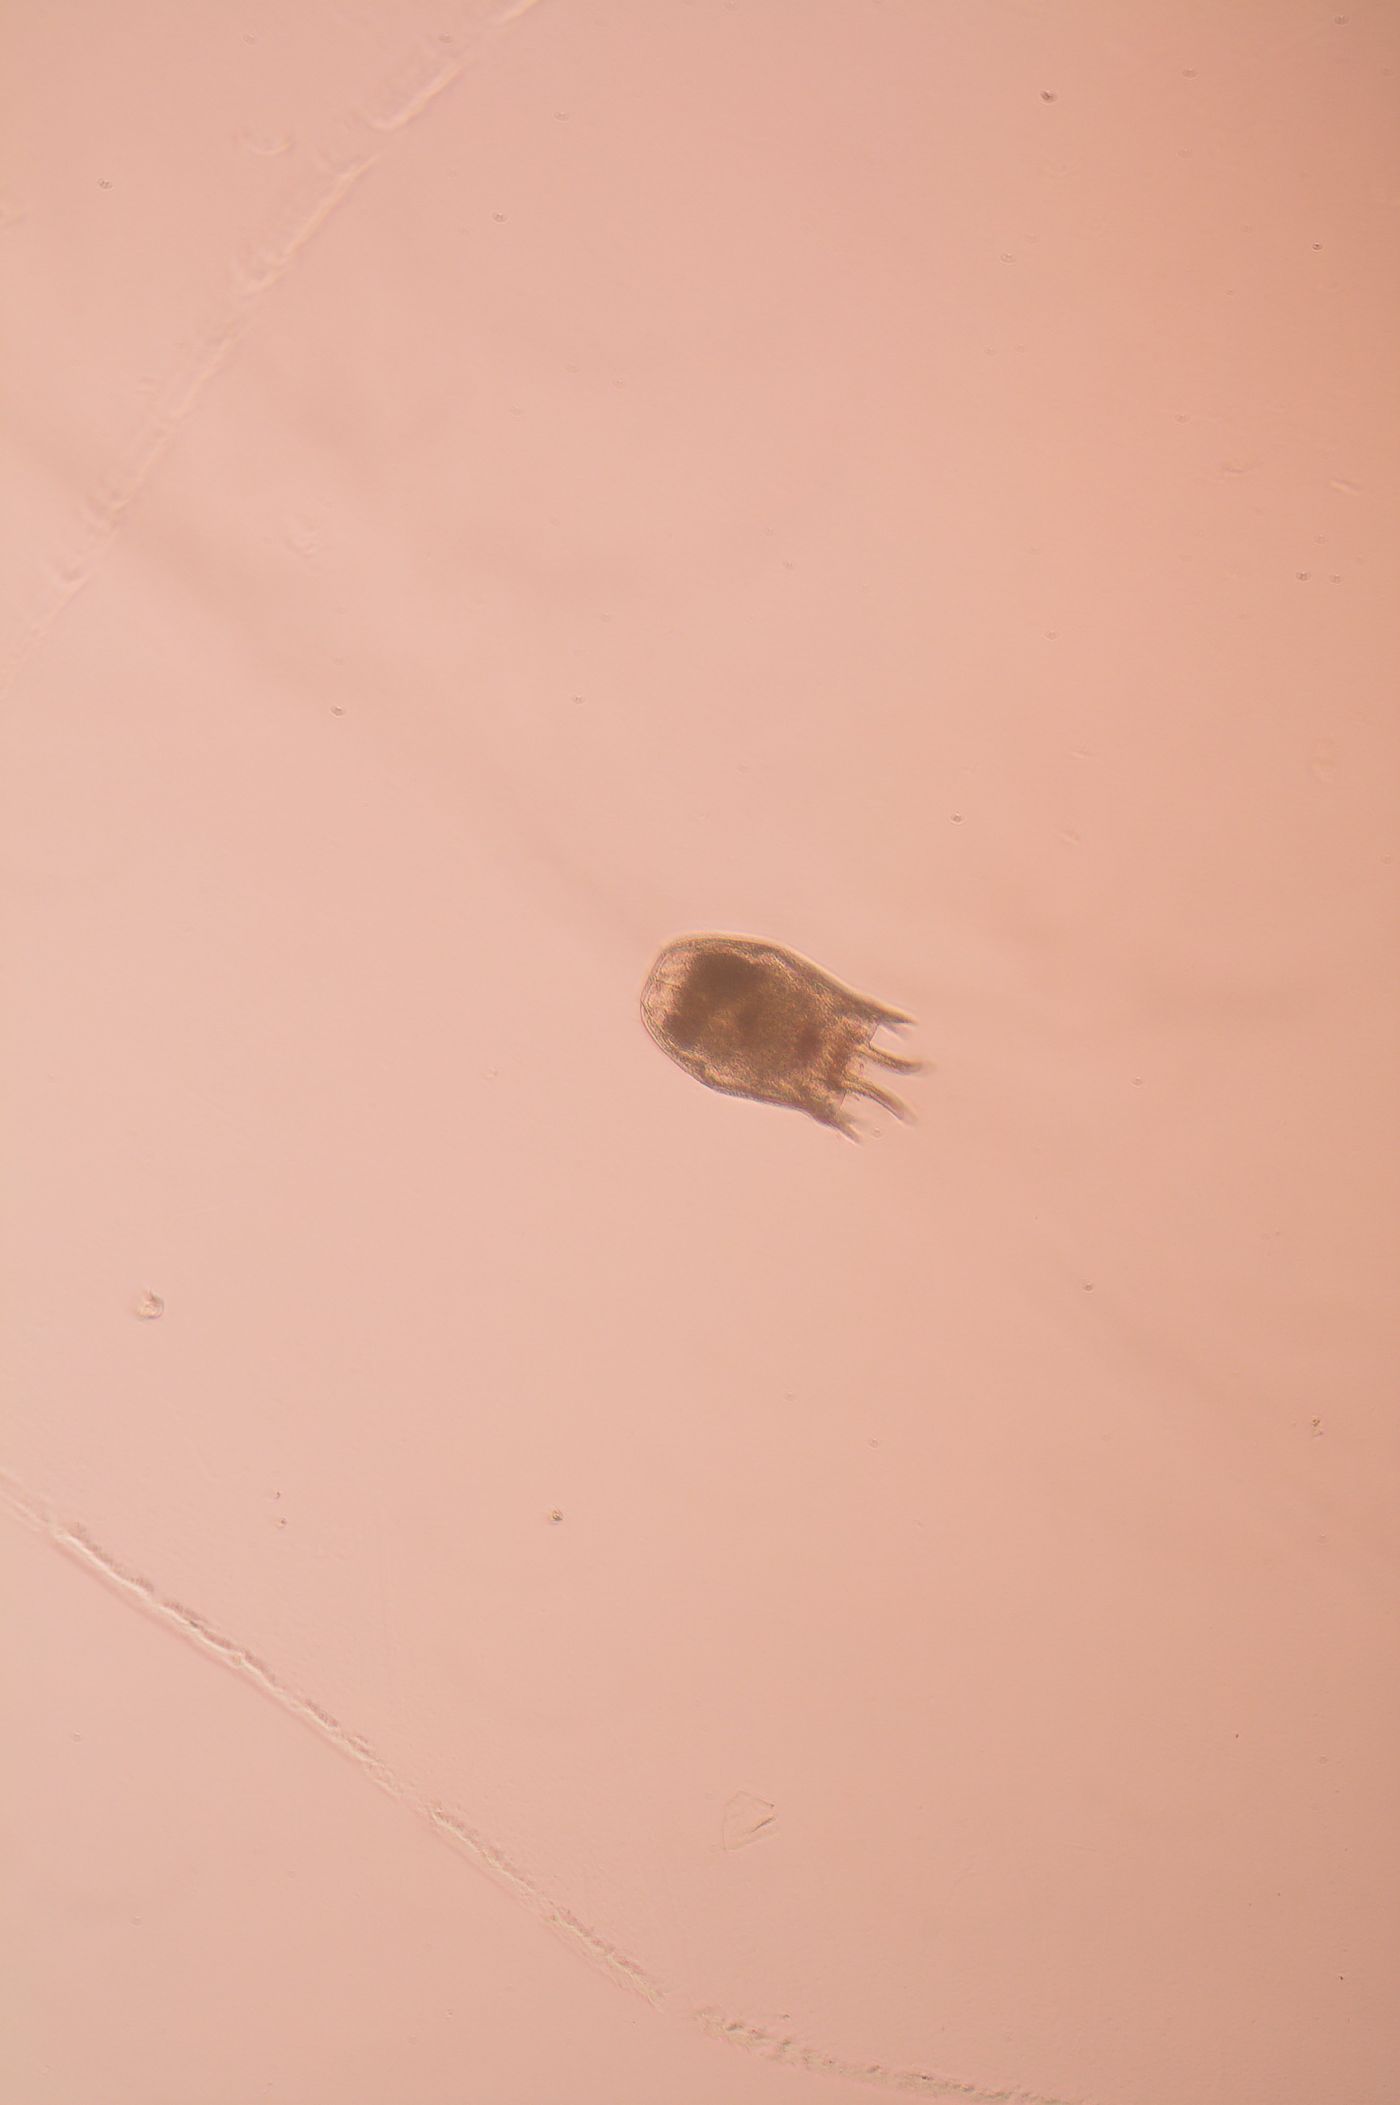 Zooplankton image